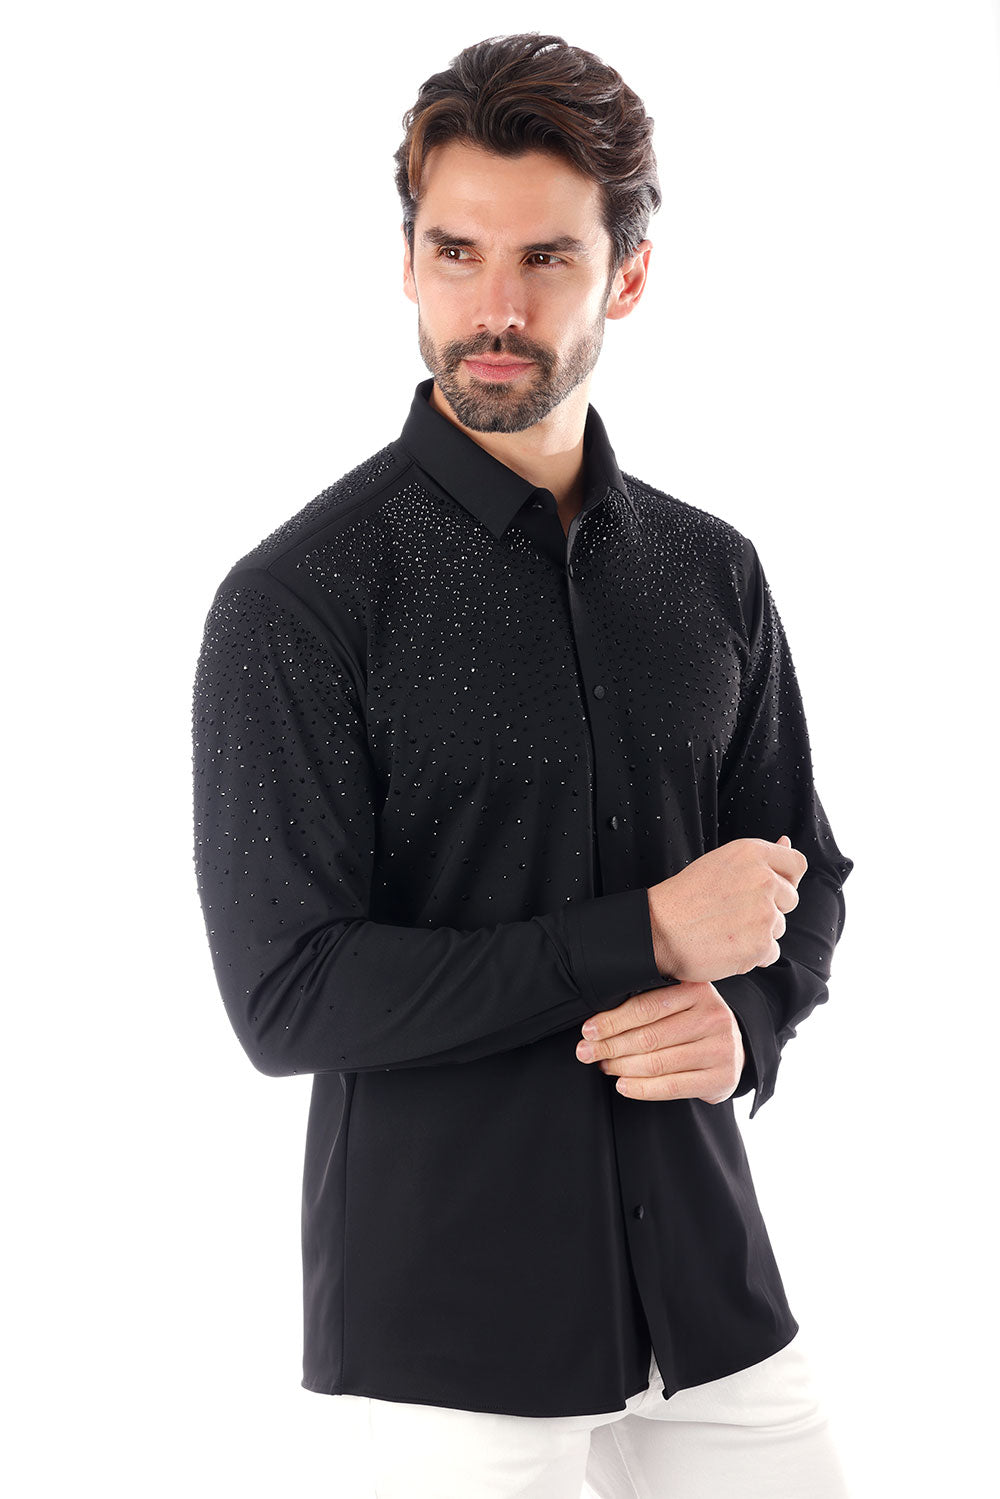 BARABAS Men's Rhinestones Jewels Long Sleeve Shirt 4B06 Black